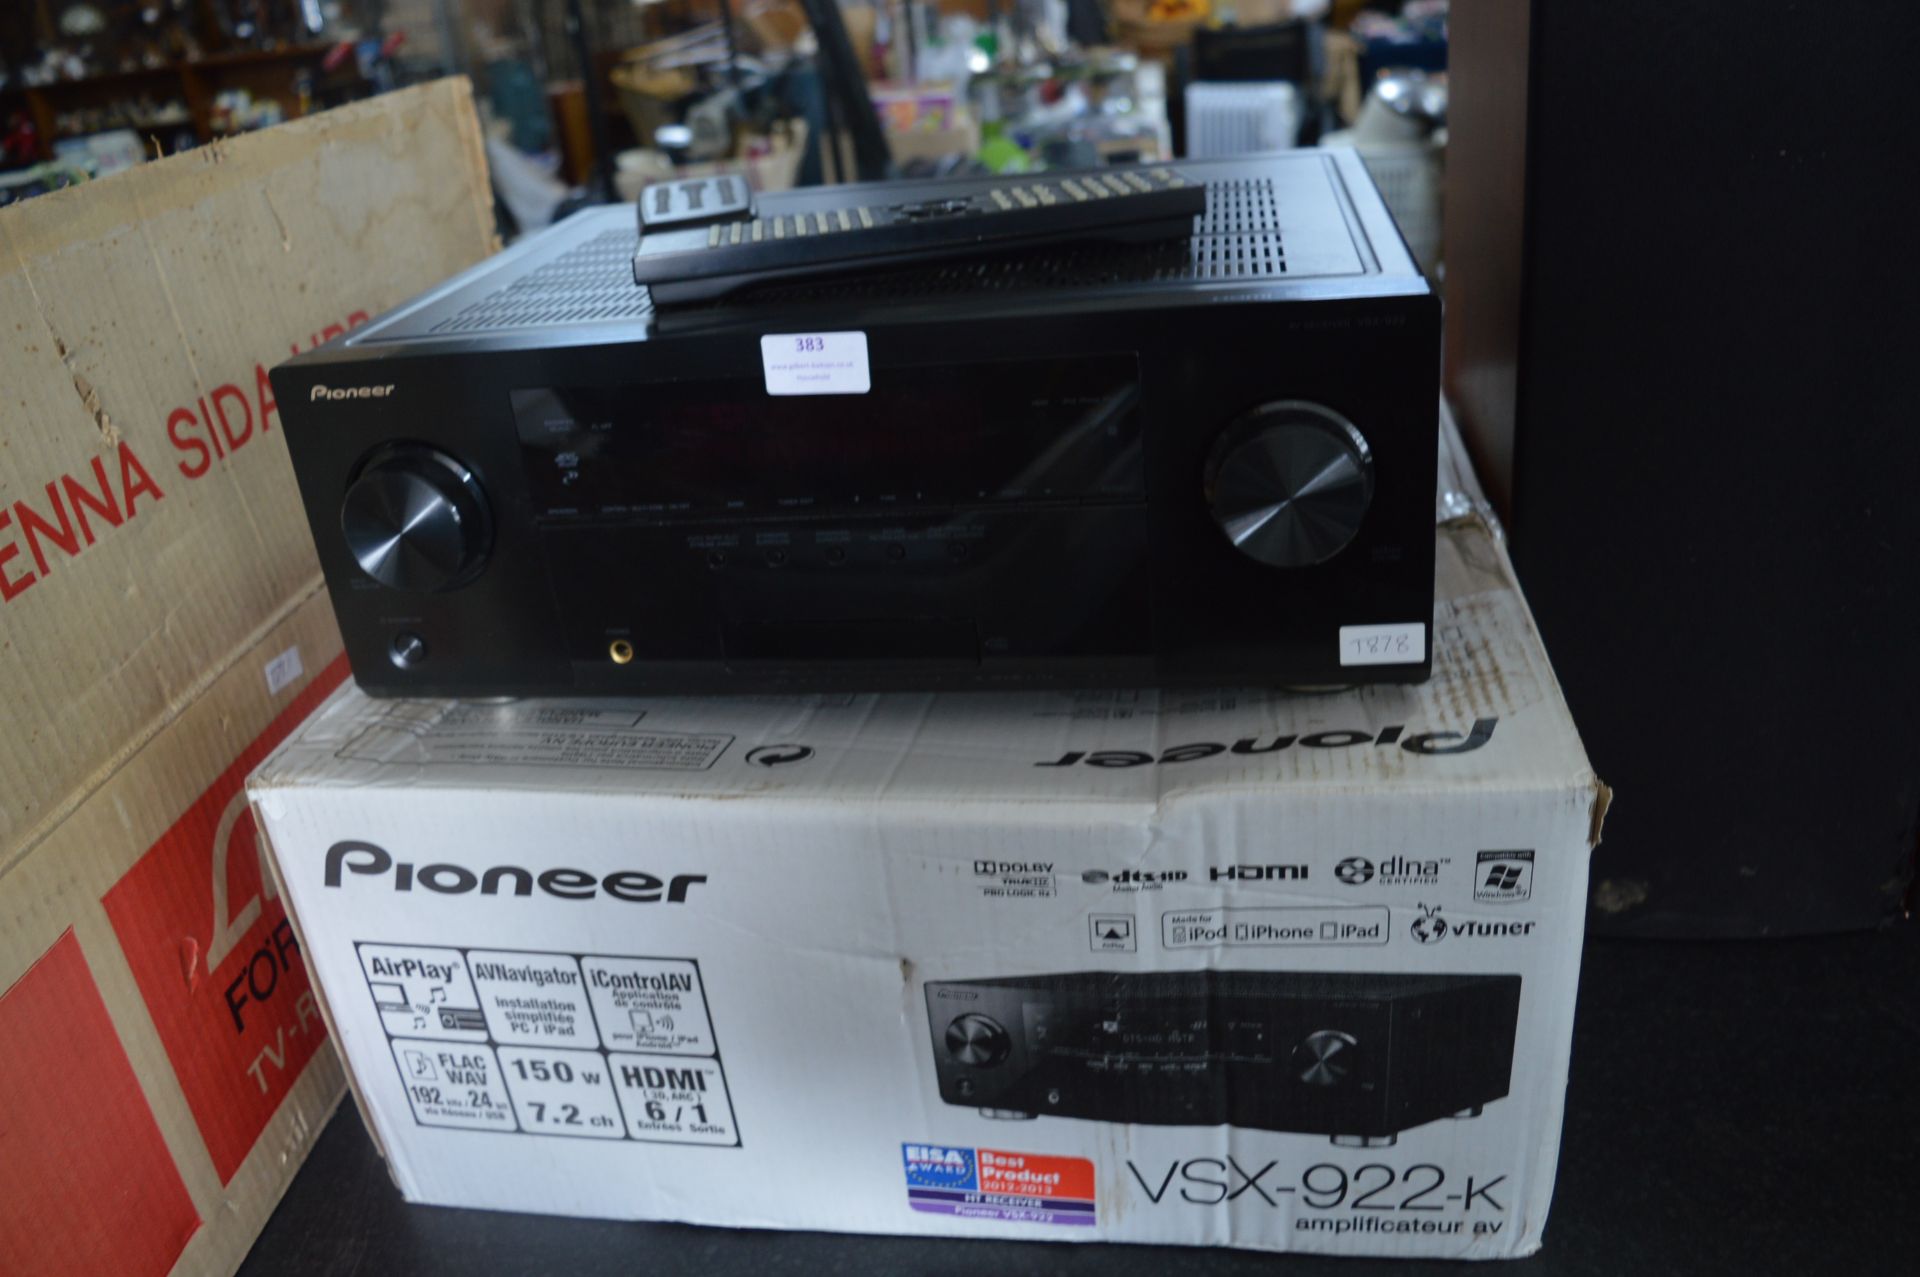 Boxed Pioneer VSX-922 Amplifier